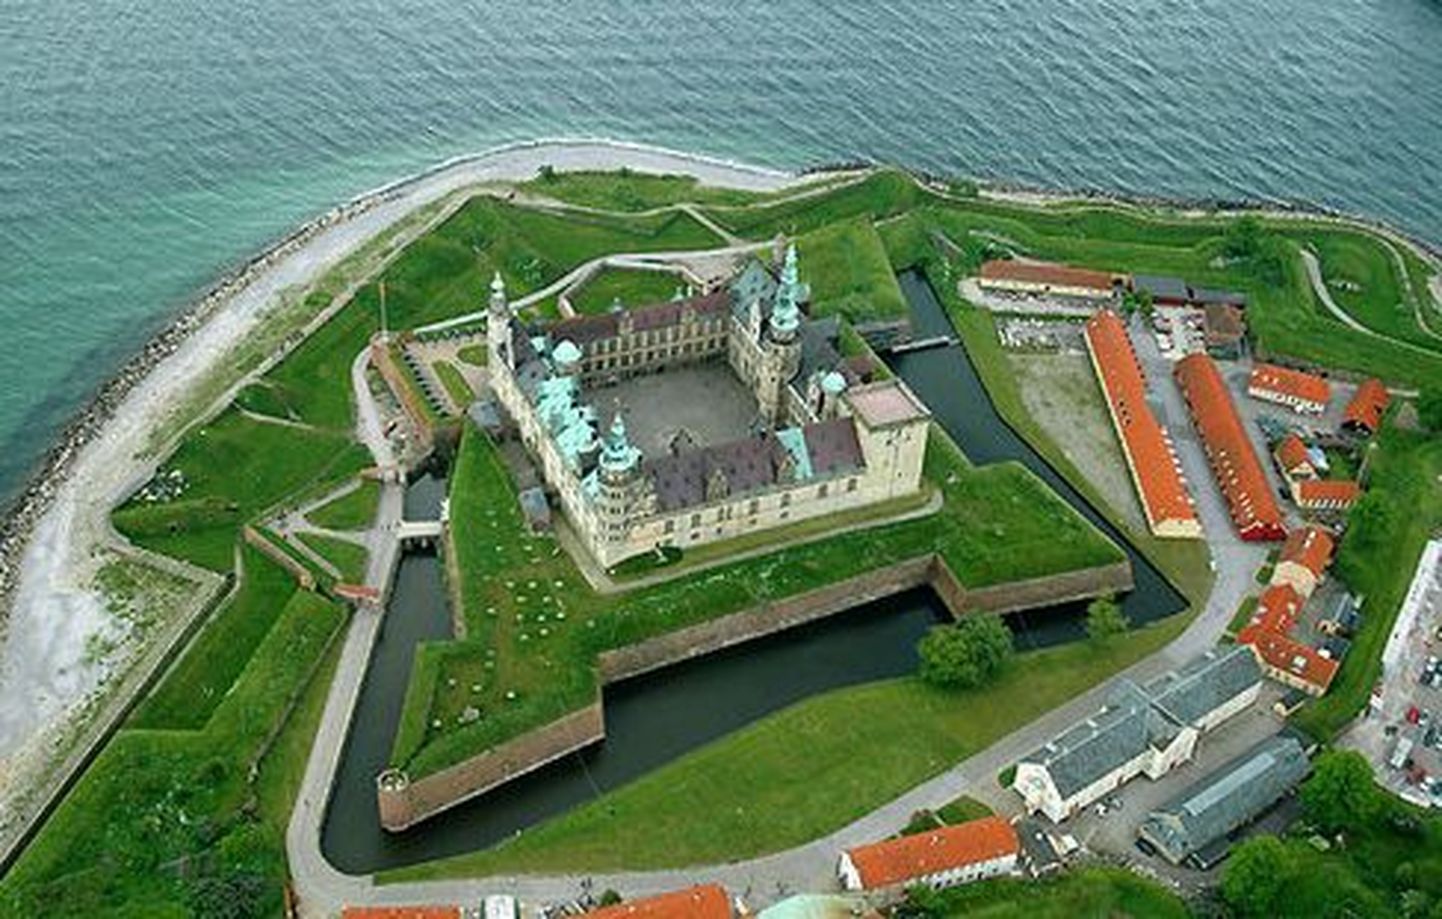 Kronoborgi loss